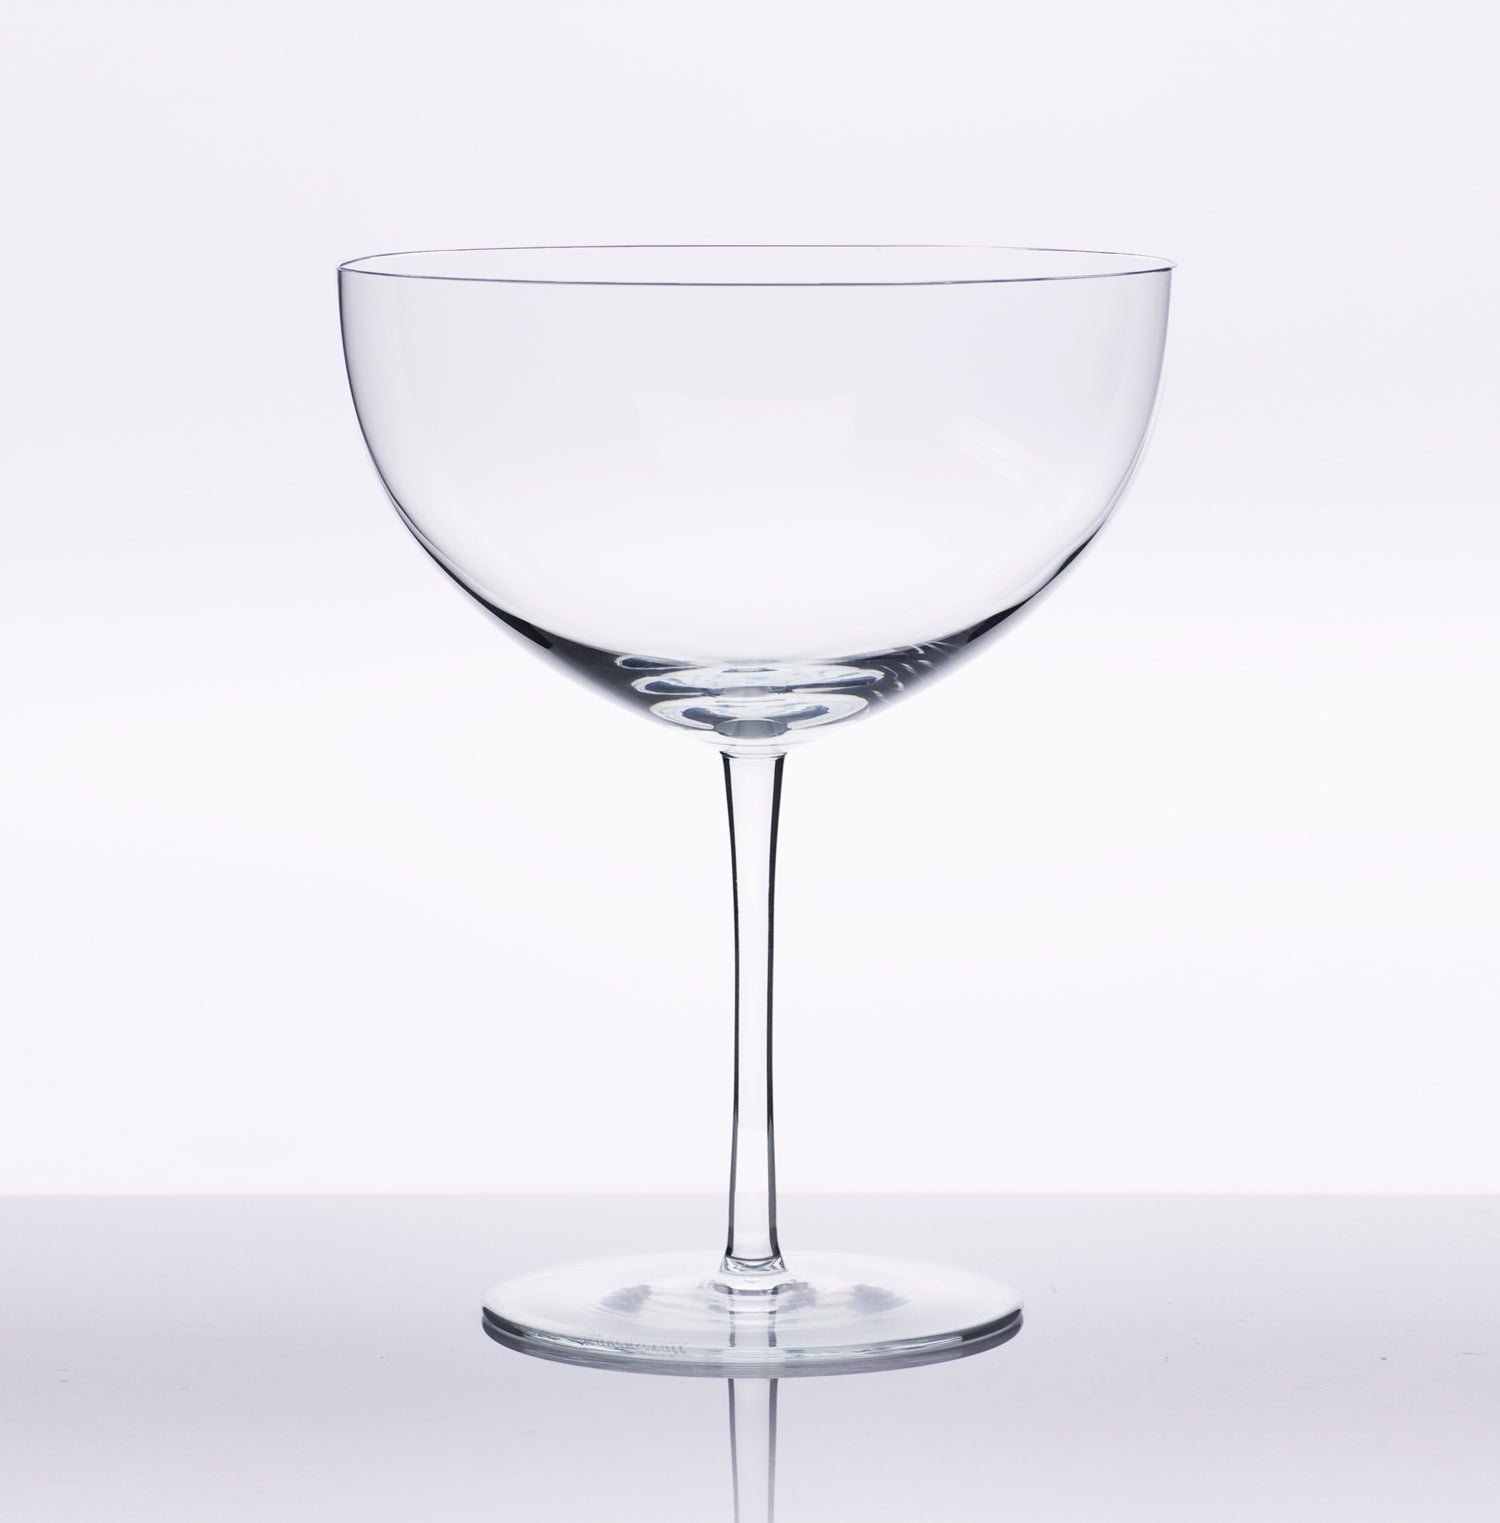 Essentials Dessert Pedestal Glass (Set of 4)